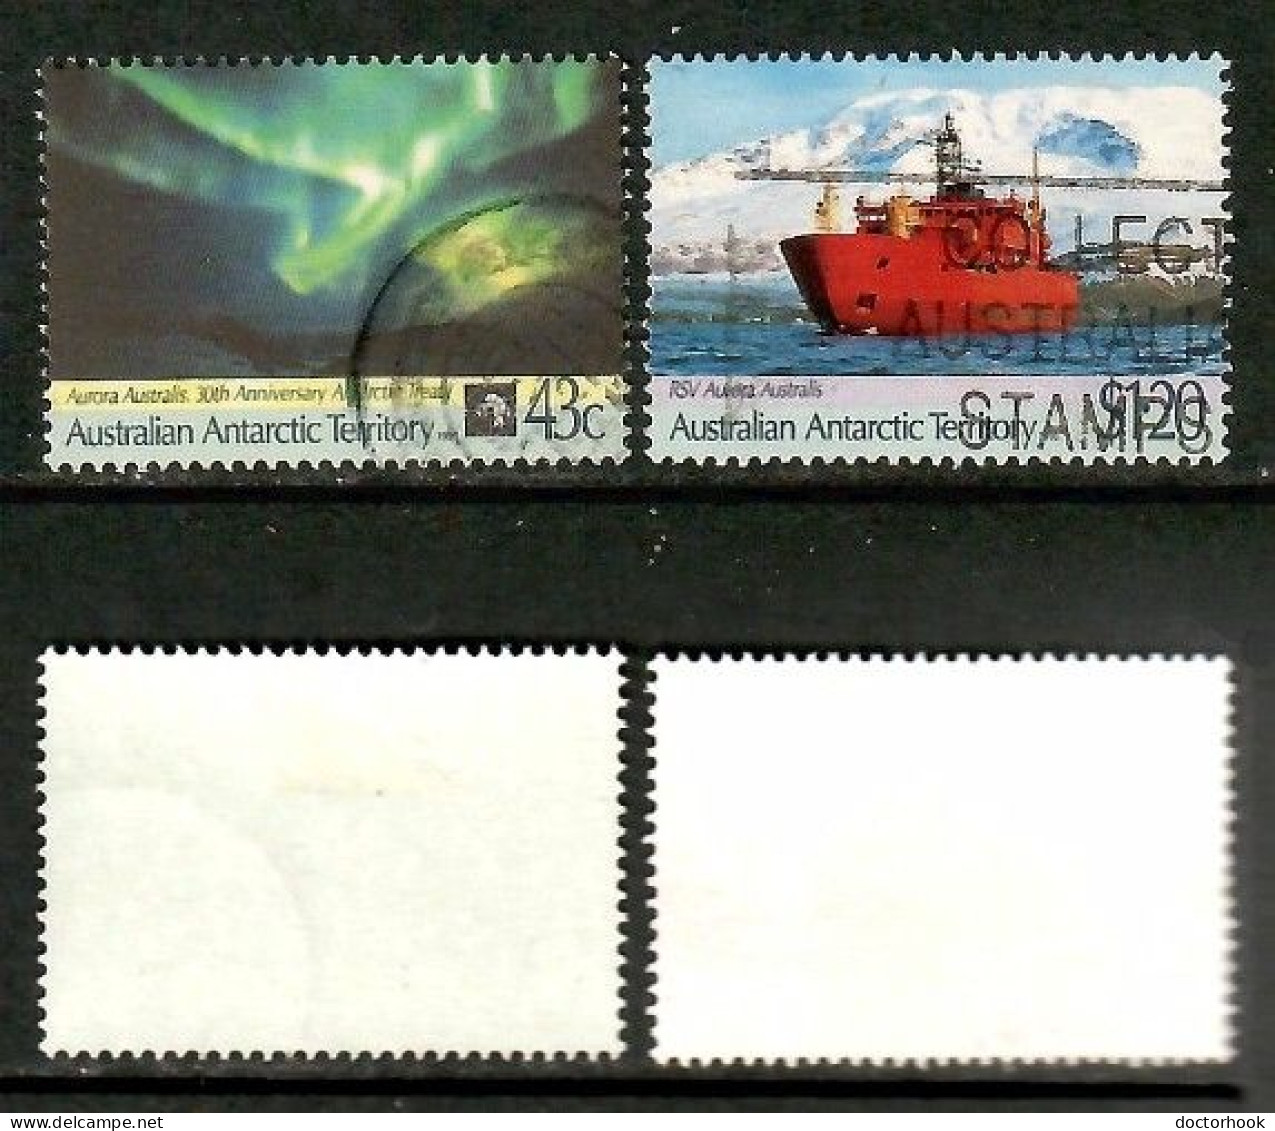 AUSTRALIAN ANTARCTIC TERRITORY   Scott # L 81-2 USED (CONDITION AS PER SCAN) (Stamp Scan # 1008-7) - Gebruikt